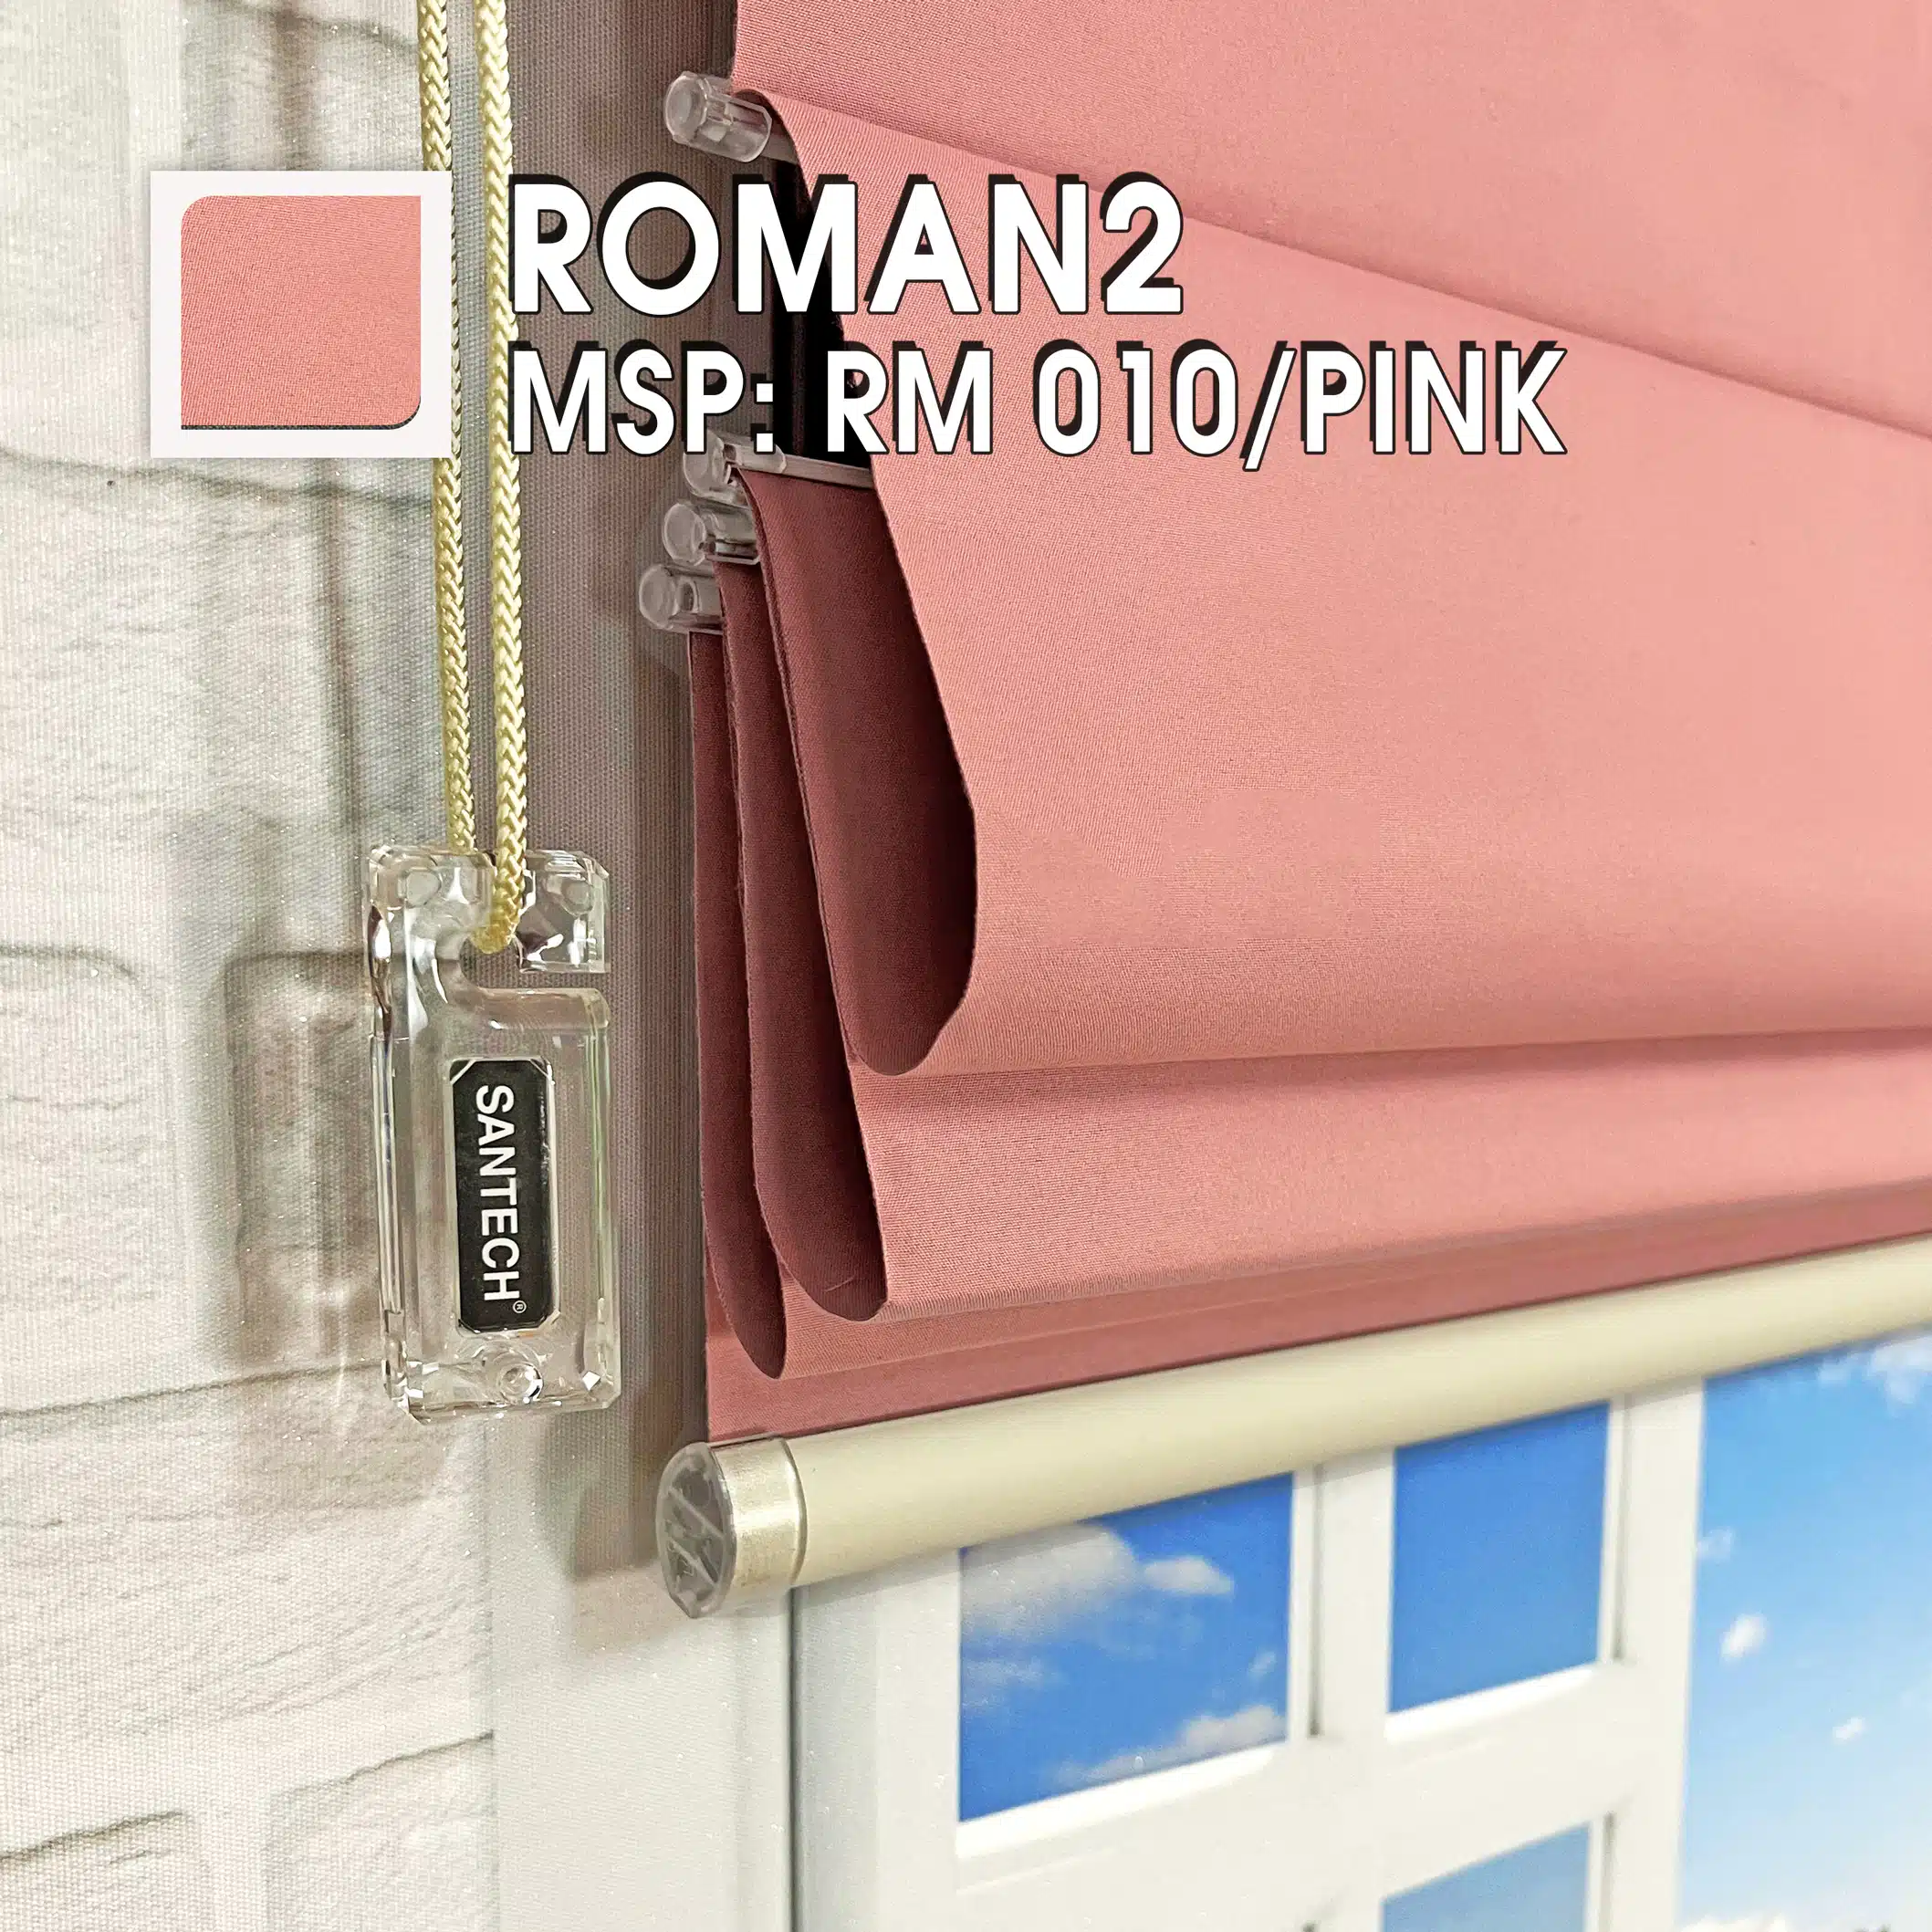 Roman2 Rm 010 